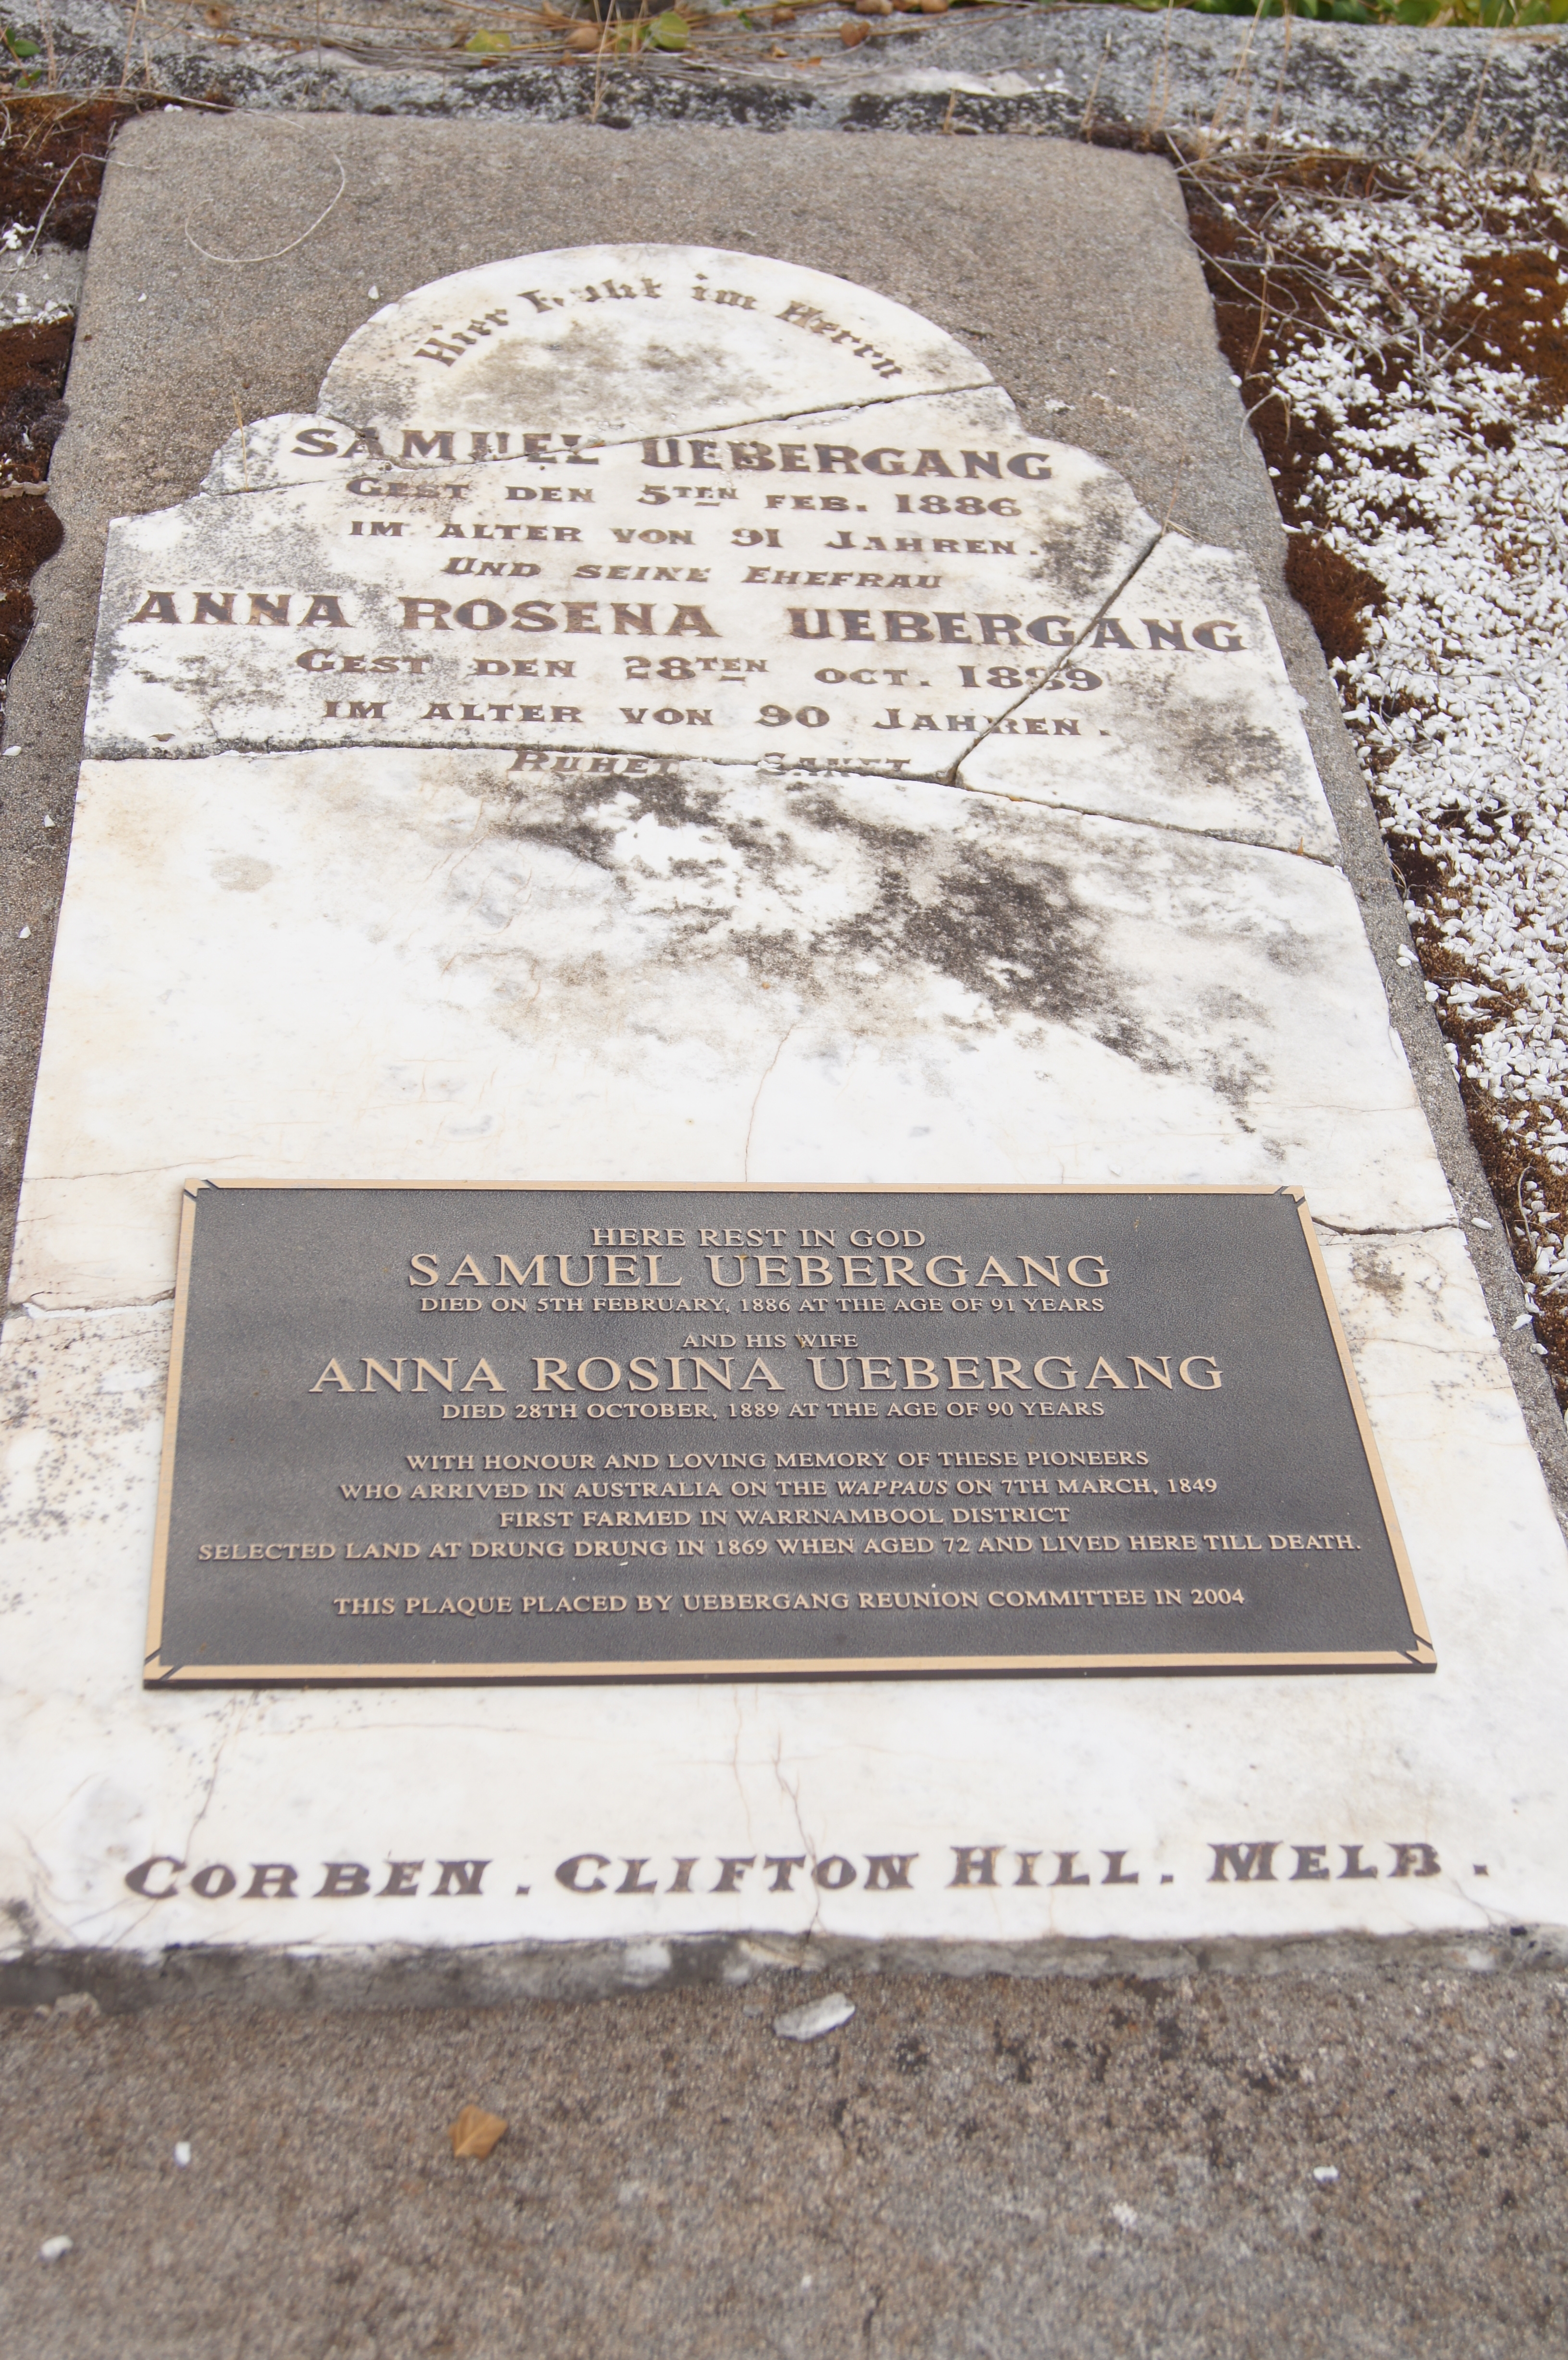 Anna Rosena Uebergang gravesite